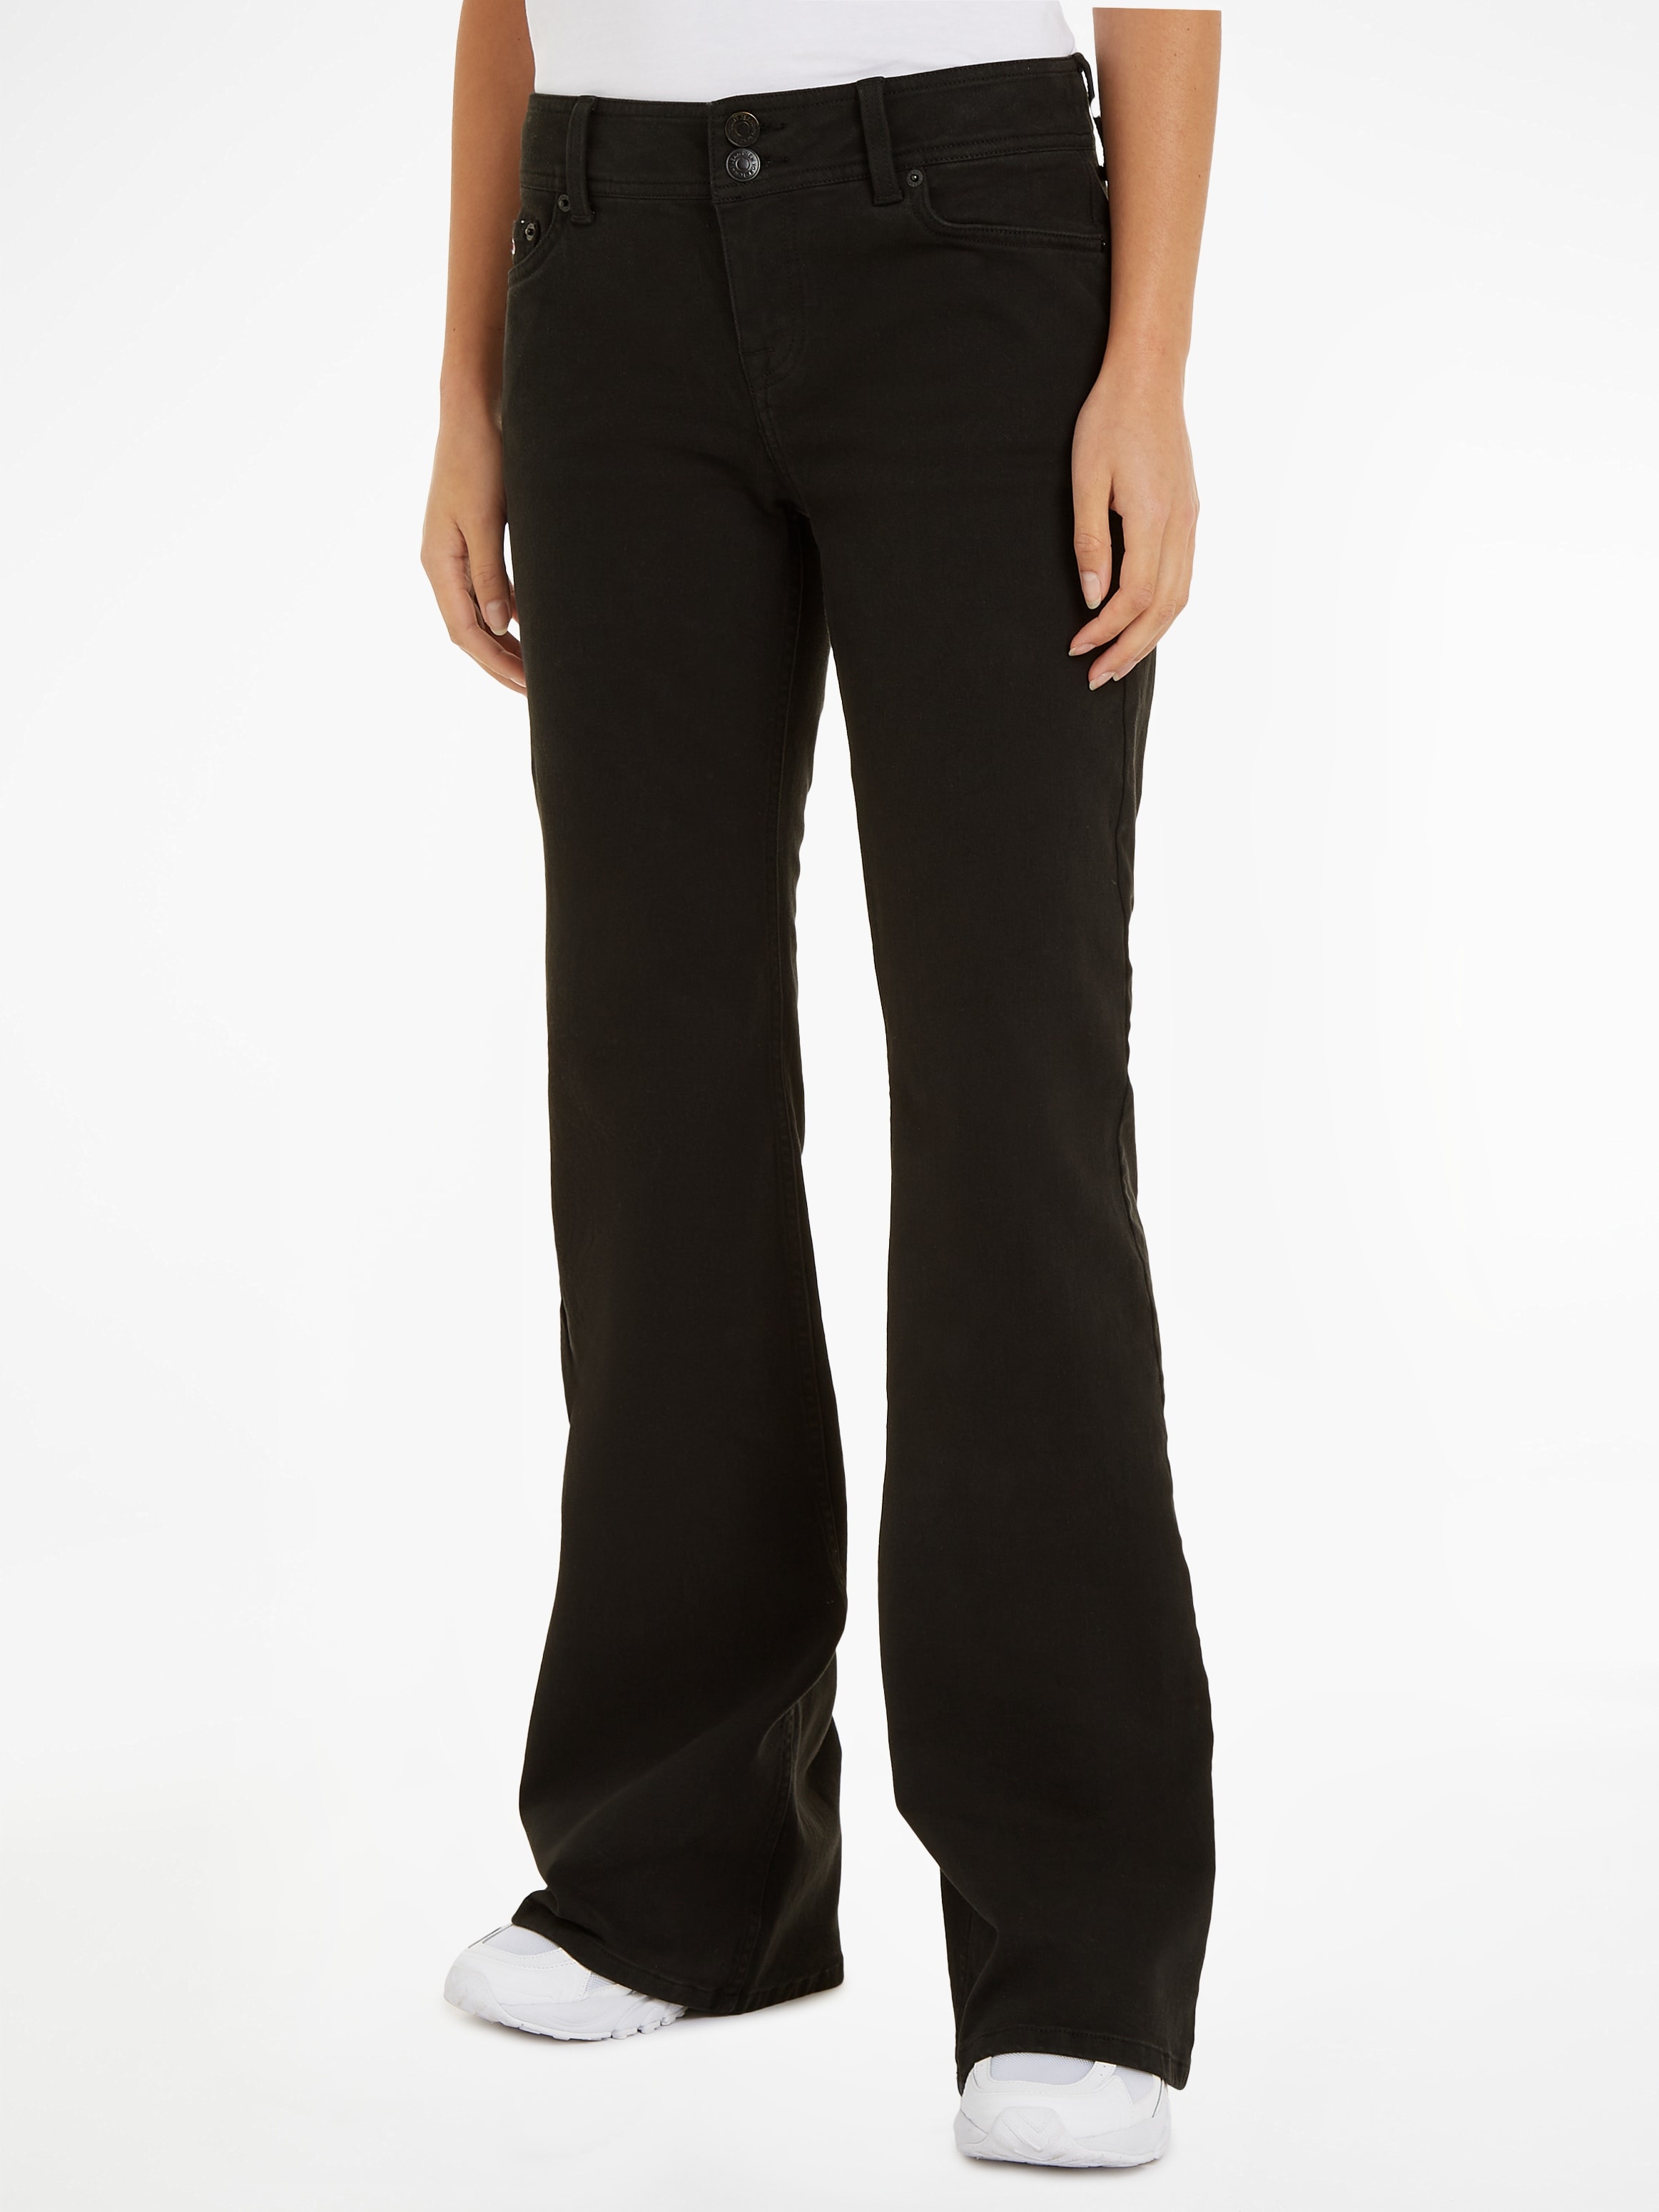 Webhose TOMMY JEANS "TJW GMD SOPHIE LW FLARE" Gr. 32, Länge 30, schwarz (black) Damen Hosen 5-Pocket-Jeans Stoffhosen